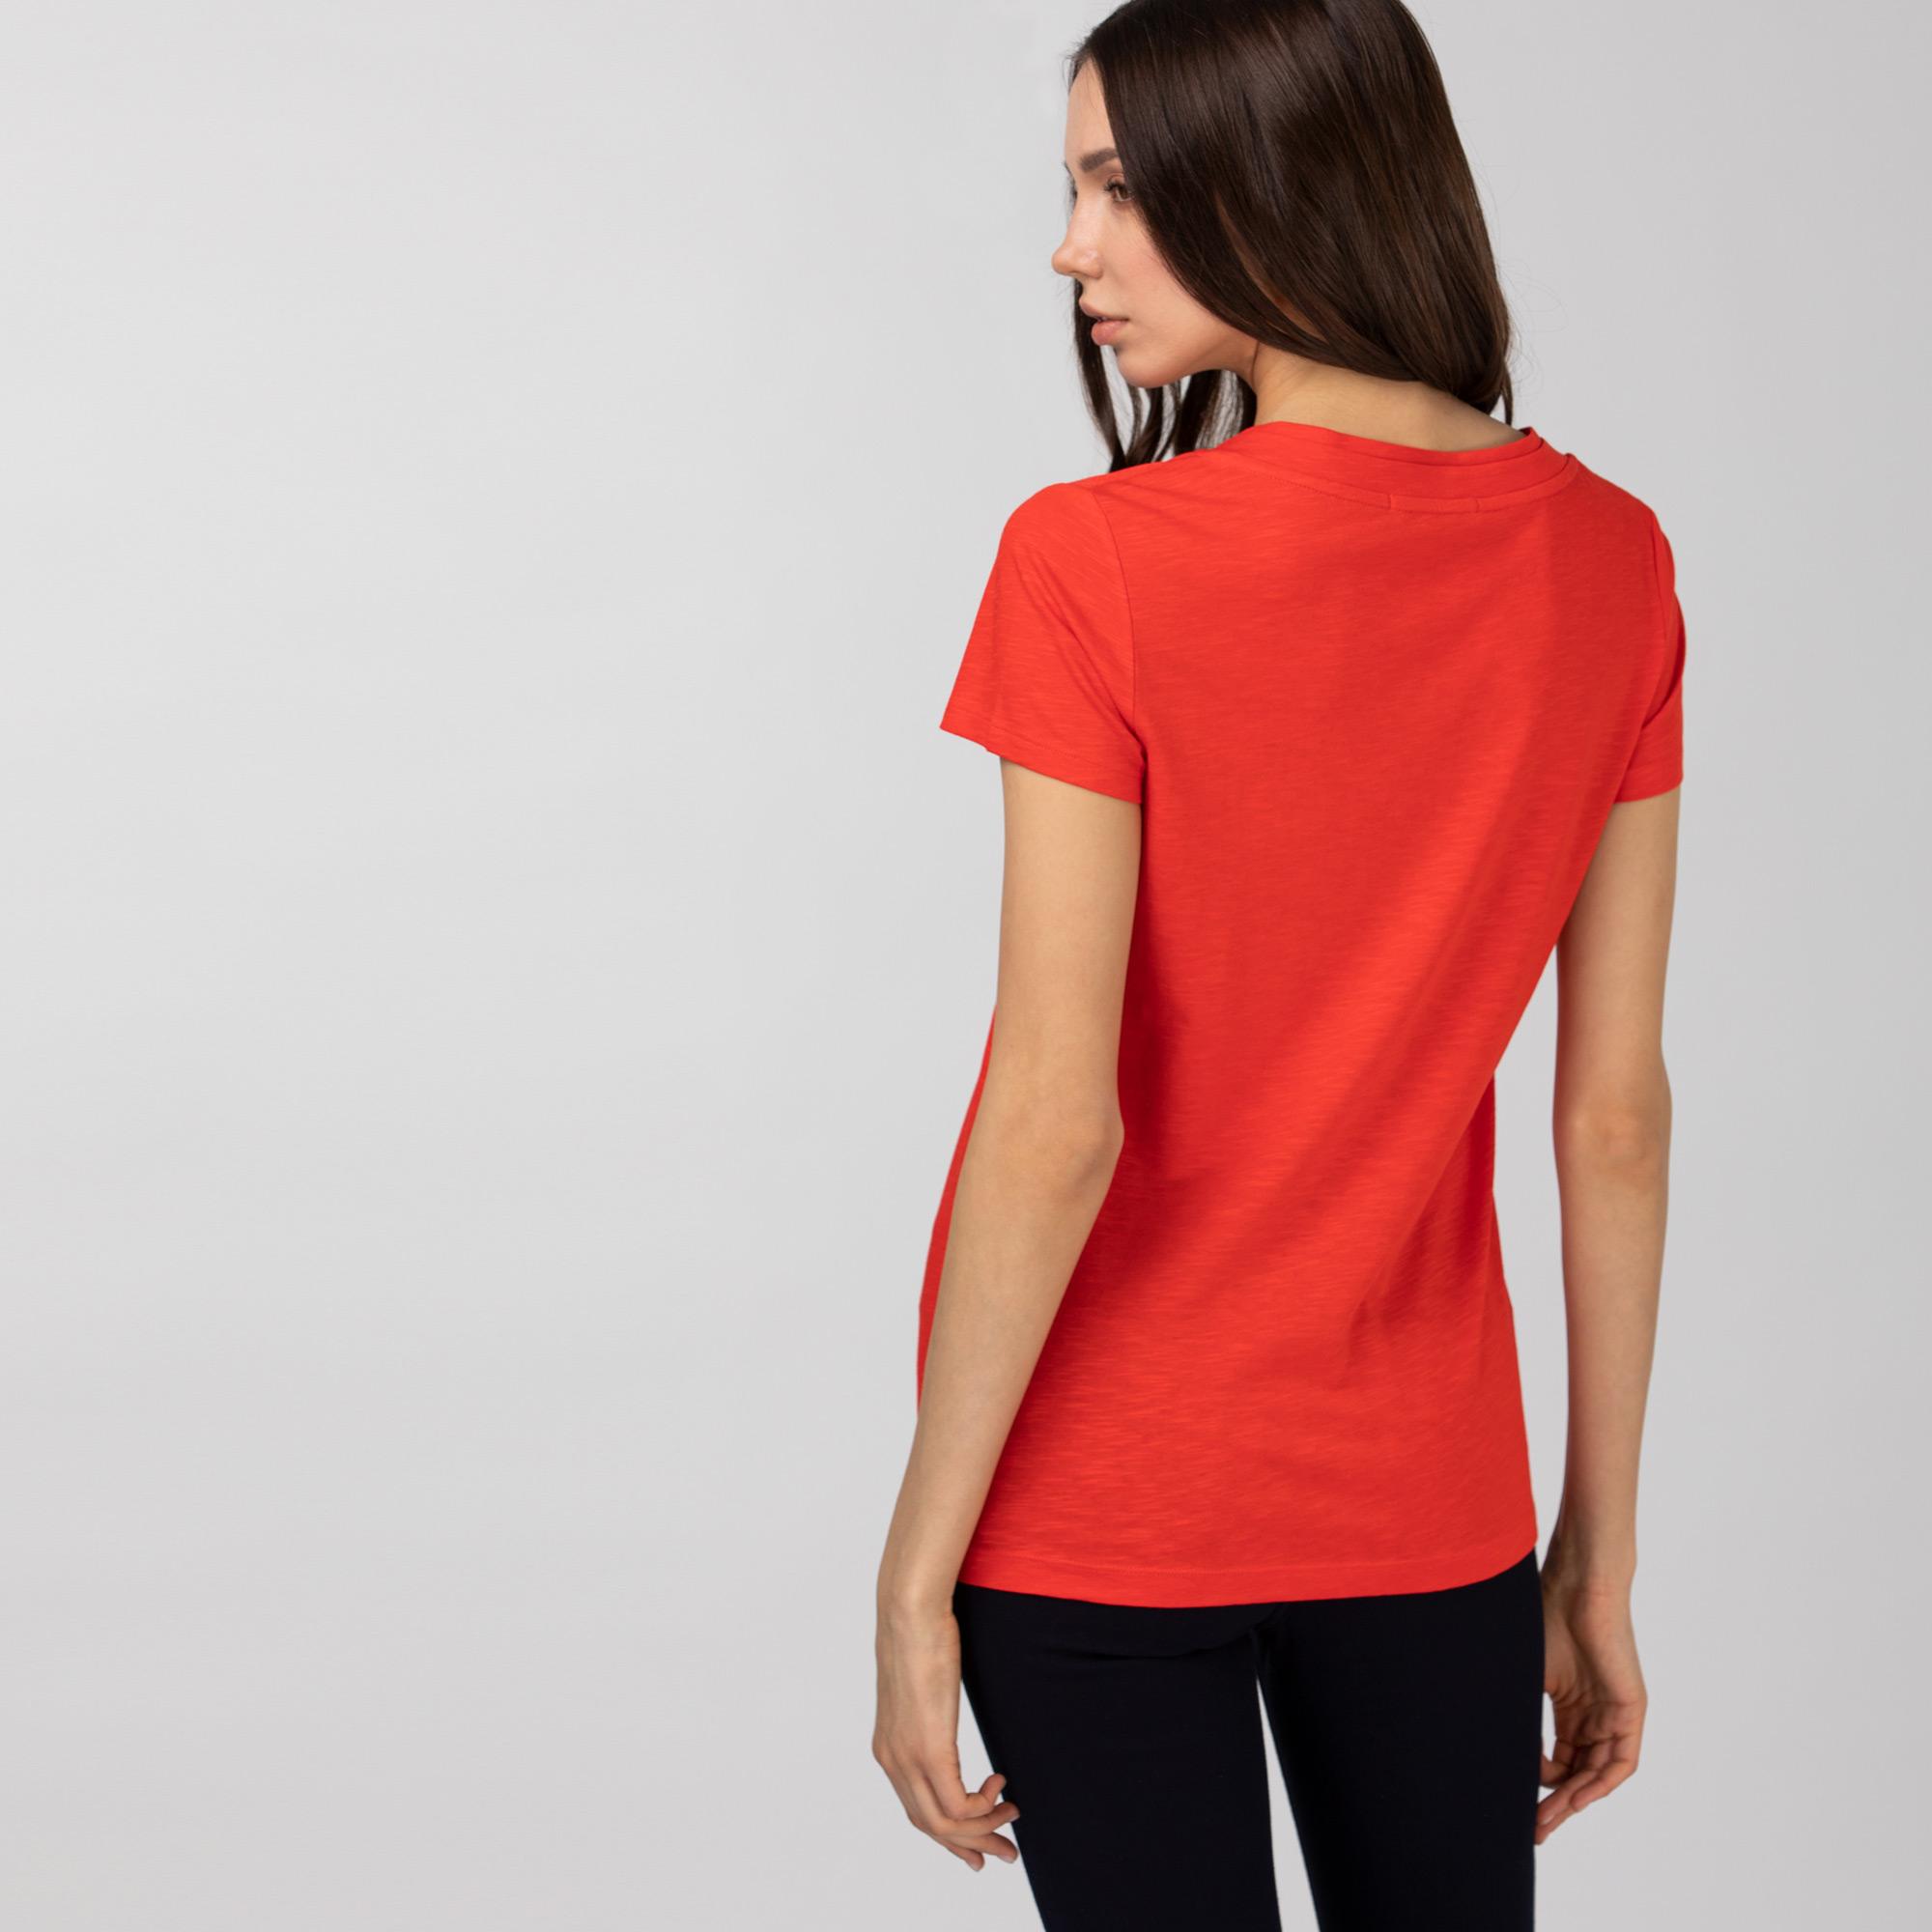 Lacoste Kadın Slim Fit V Yaka Kırmızı T-Shirt. 4